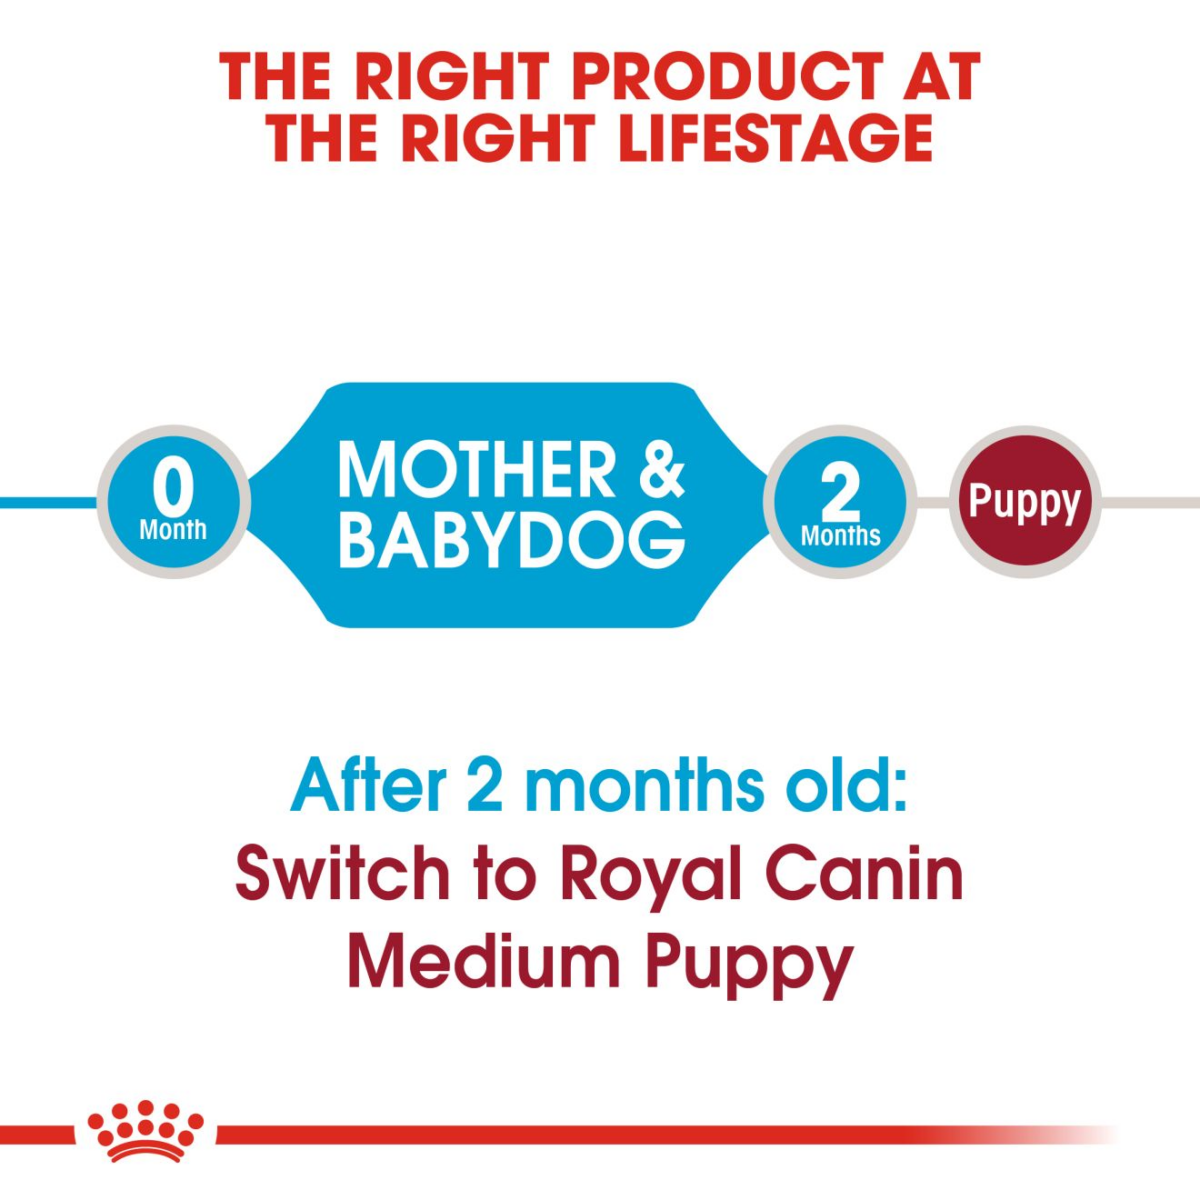 Royal Canin Medium Starter Dry Dog Food